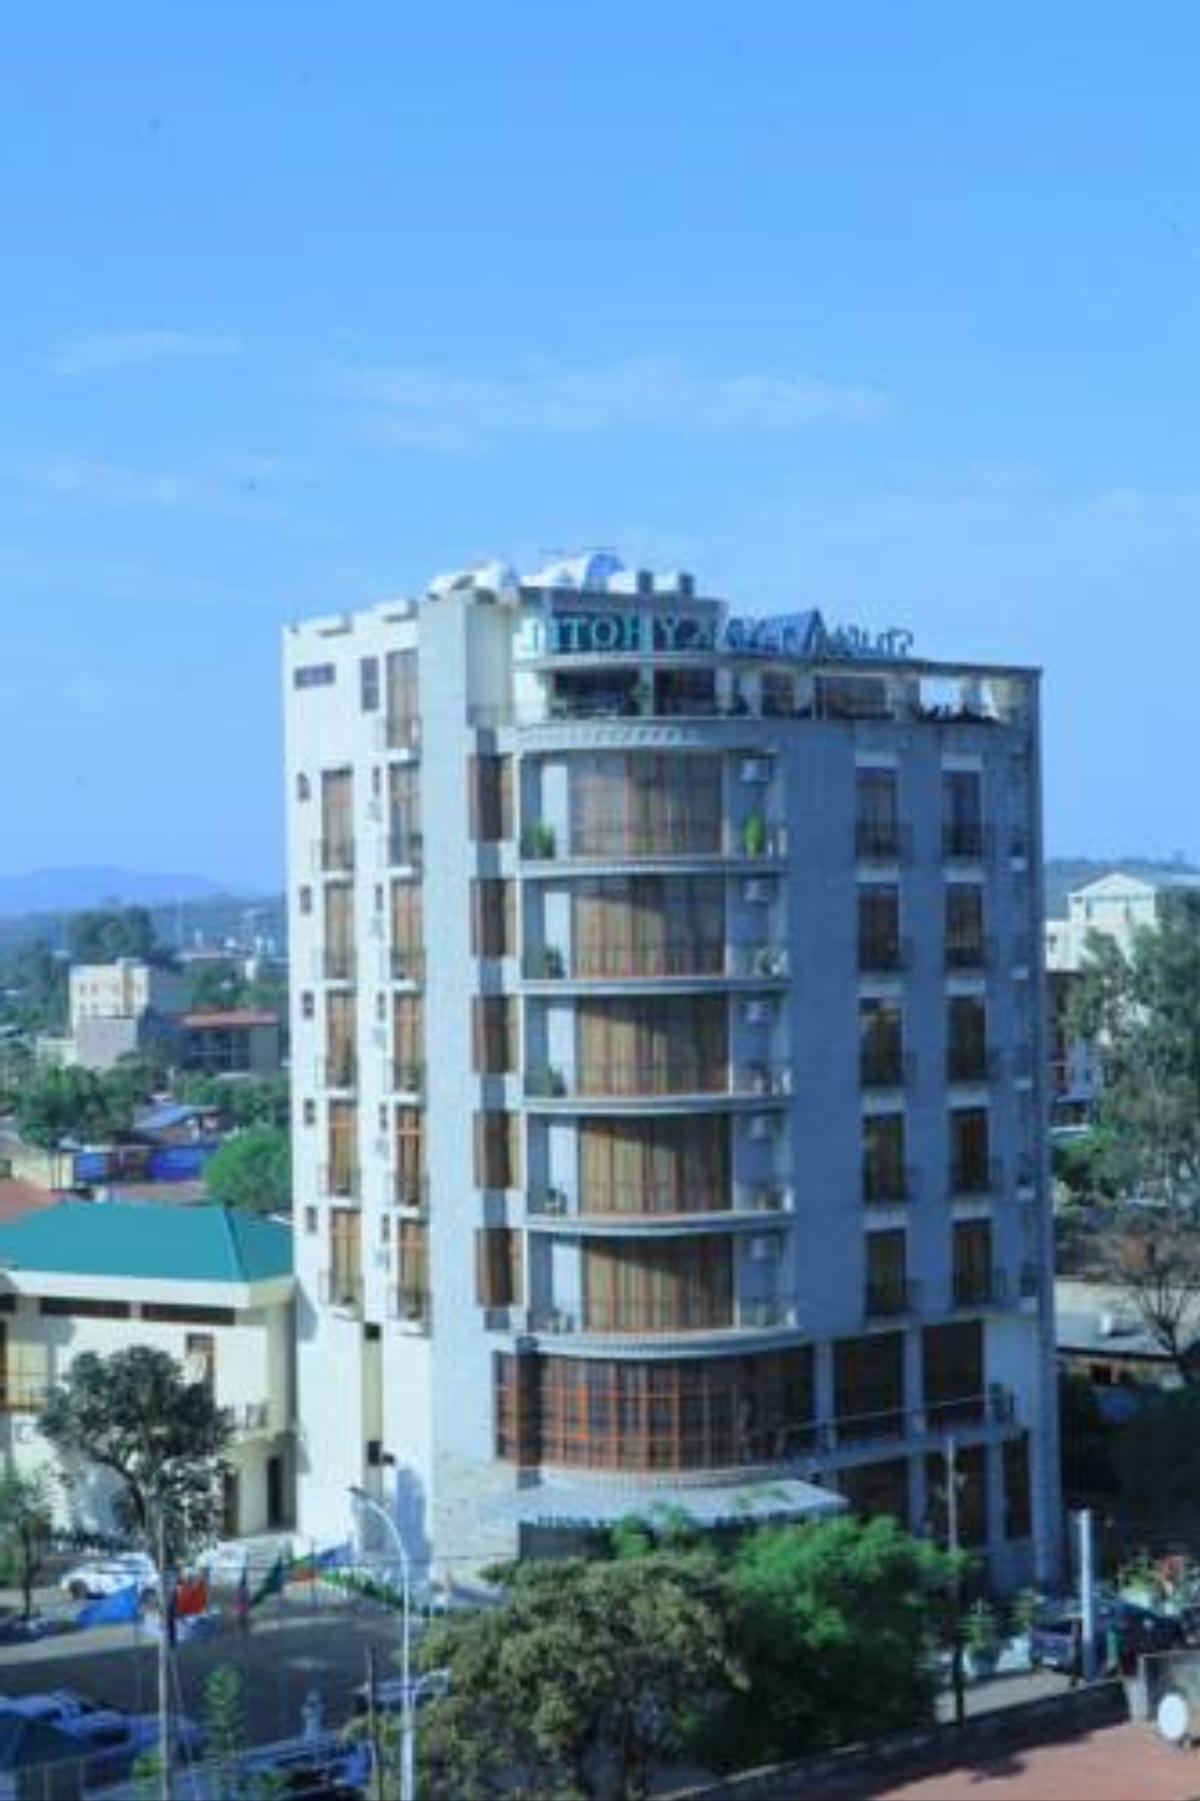 Naky Hotel Hotel Bahir Dar Ethiopia